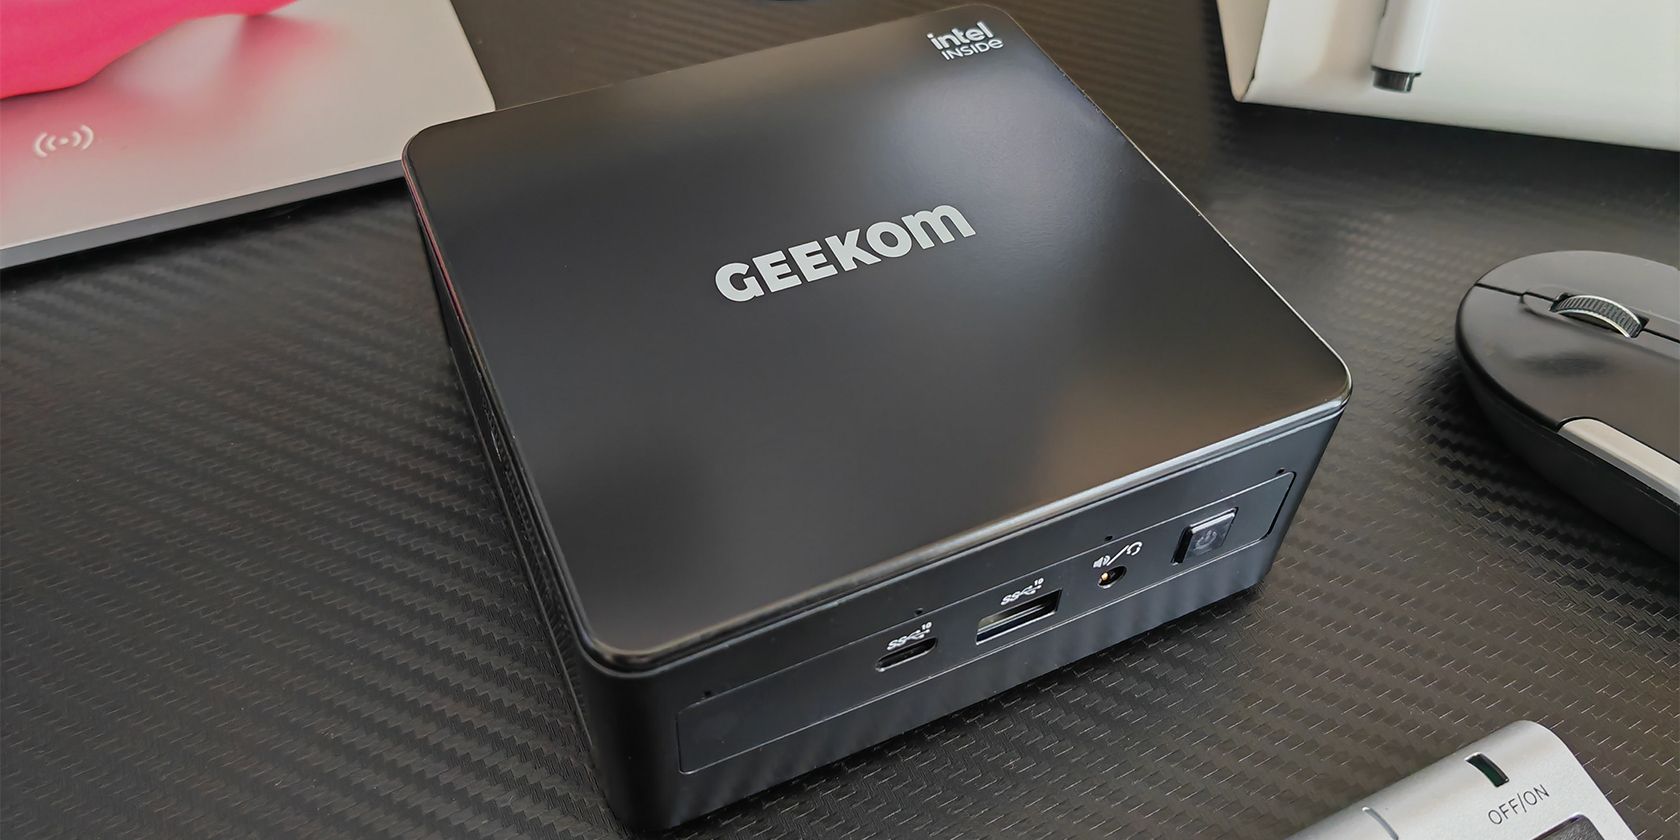 Geekom IT8 mini pc top view